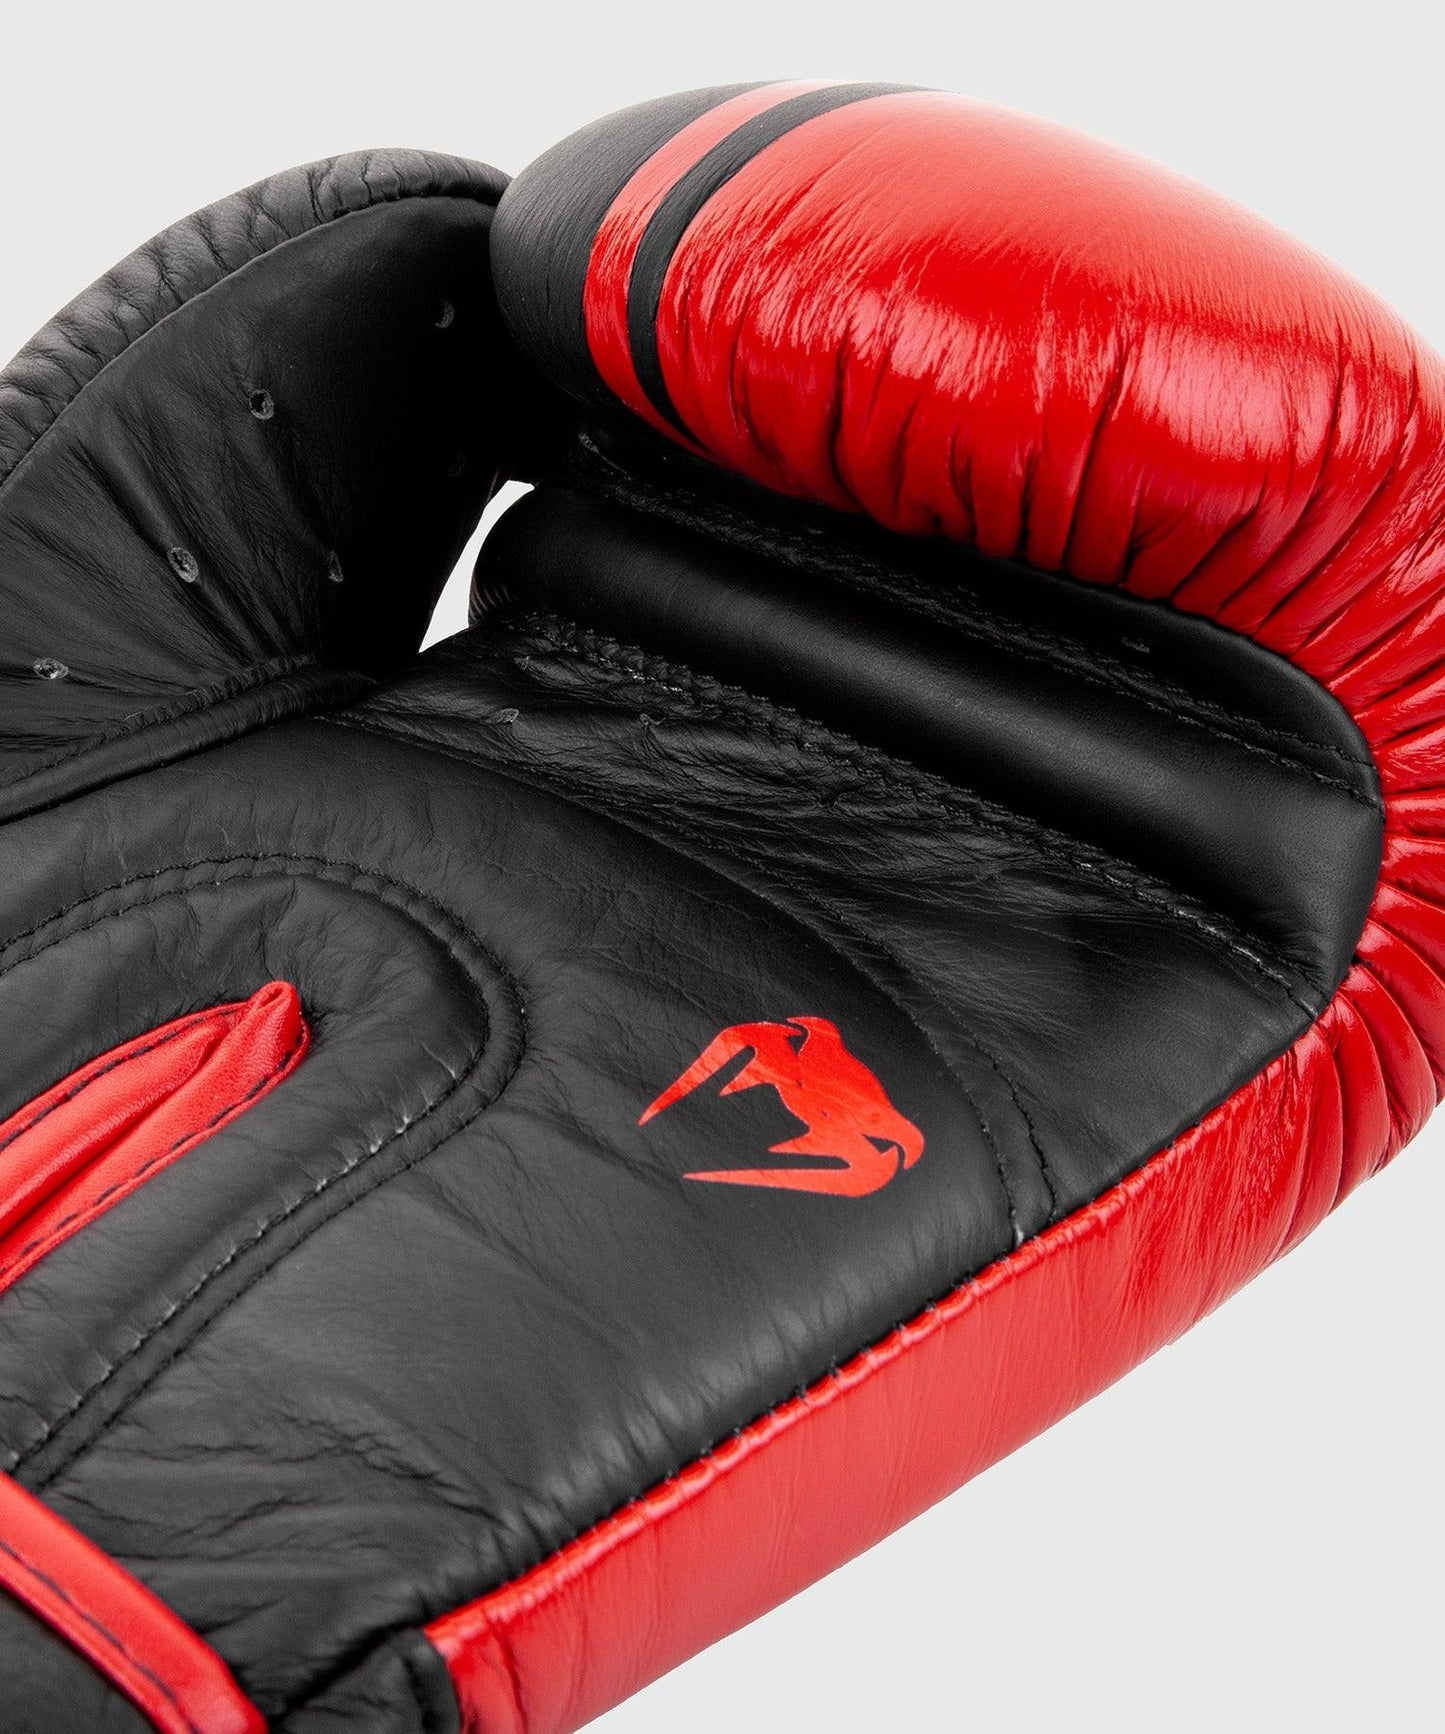 Venum Shield Pro Boxing Gloves Velcro - Black/Red Picture 5